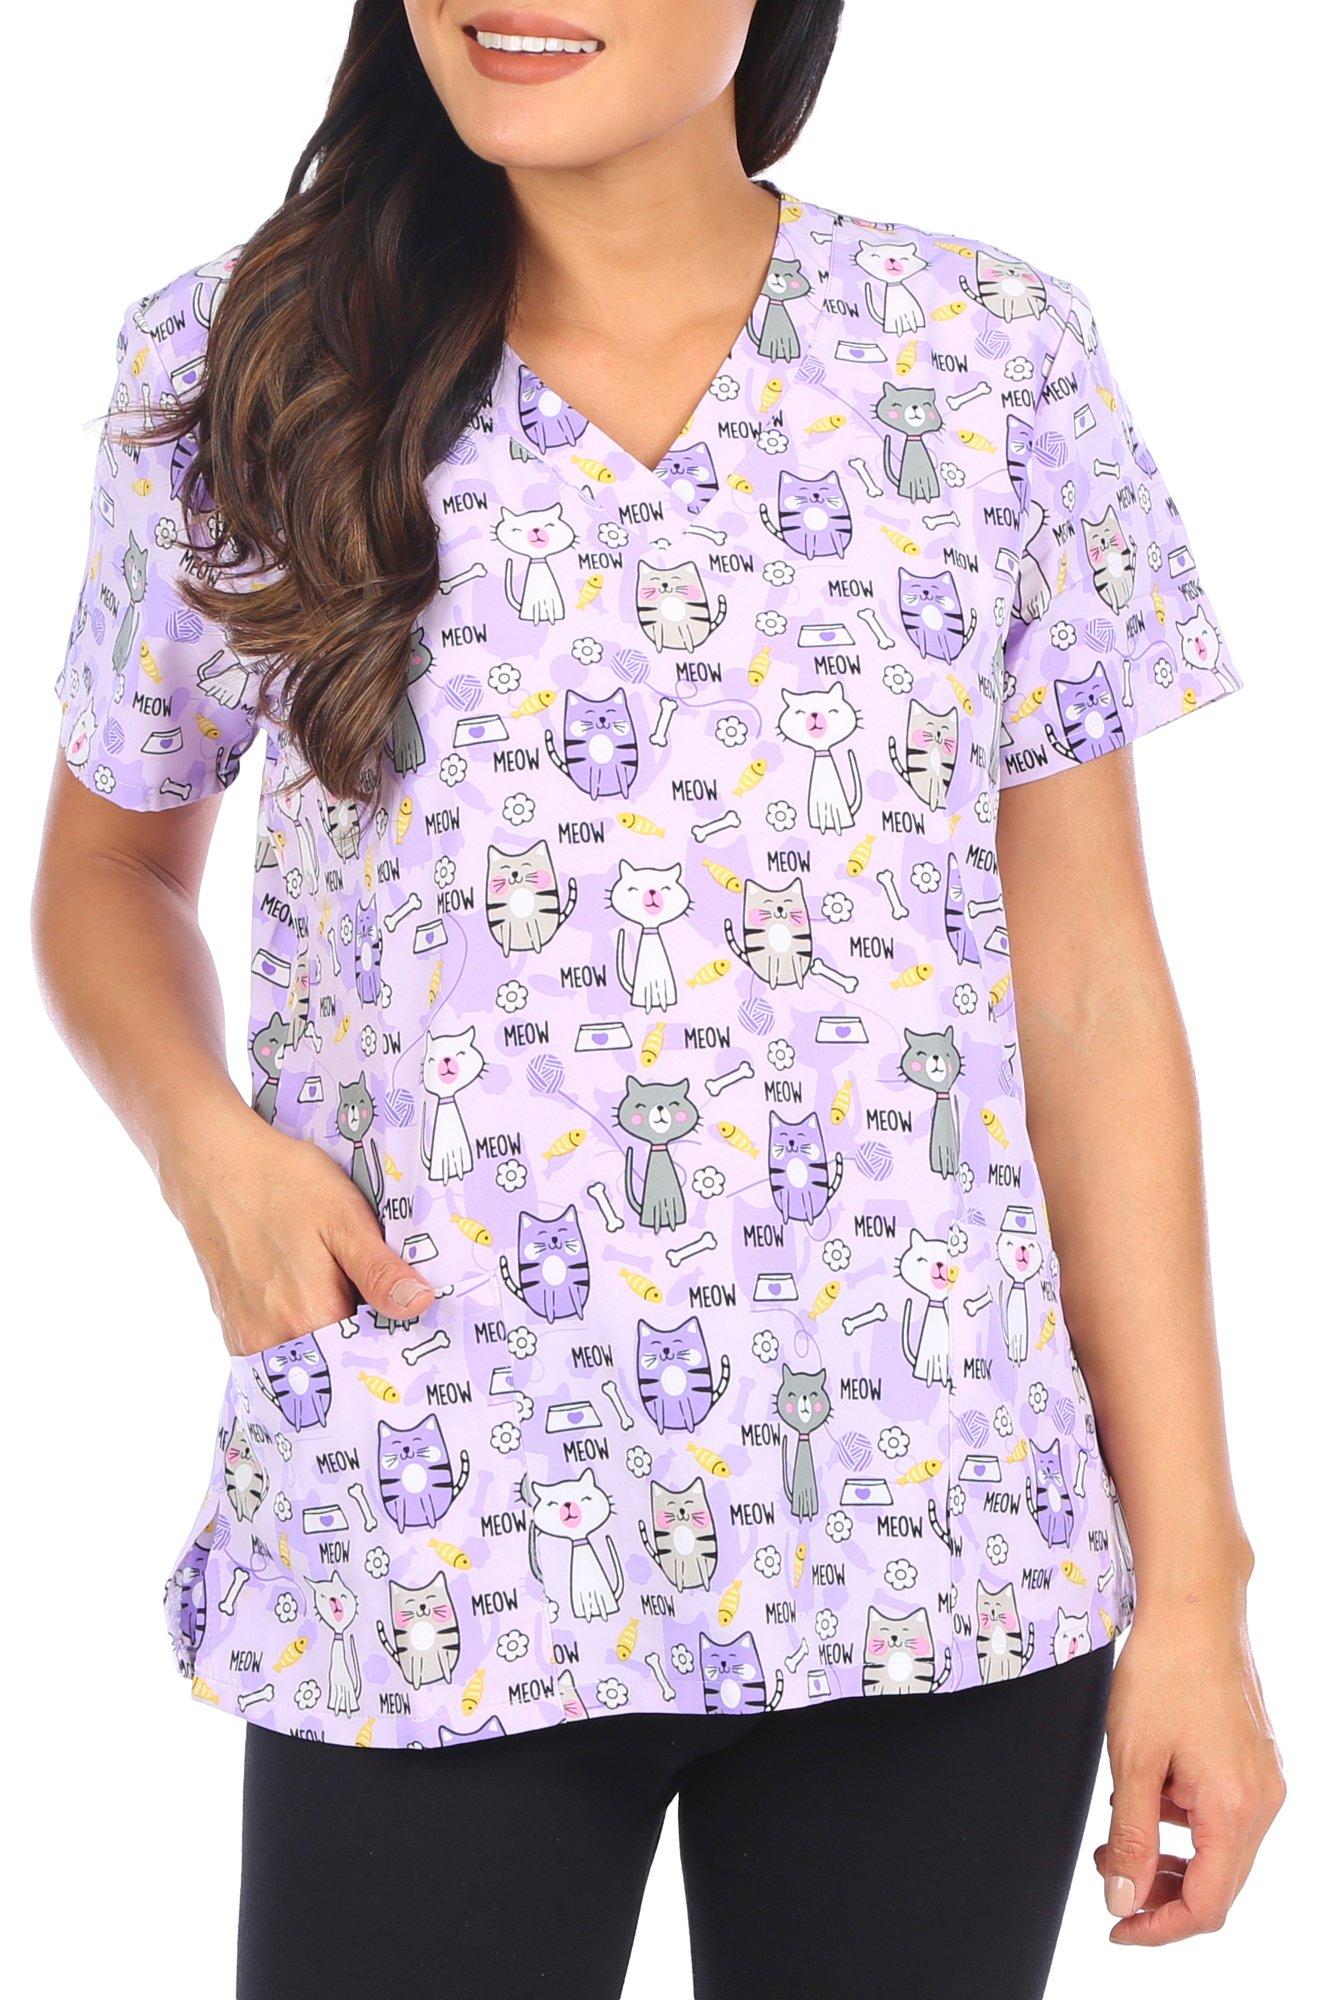 Women's Cat Print Scrub Uniform Top